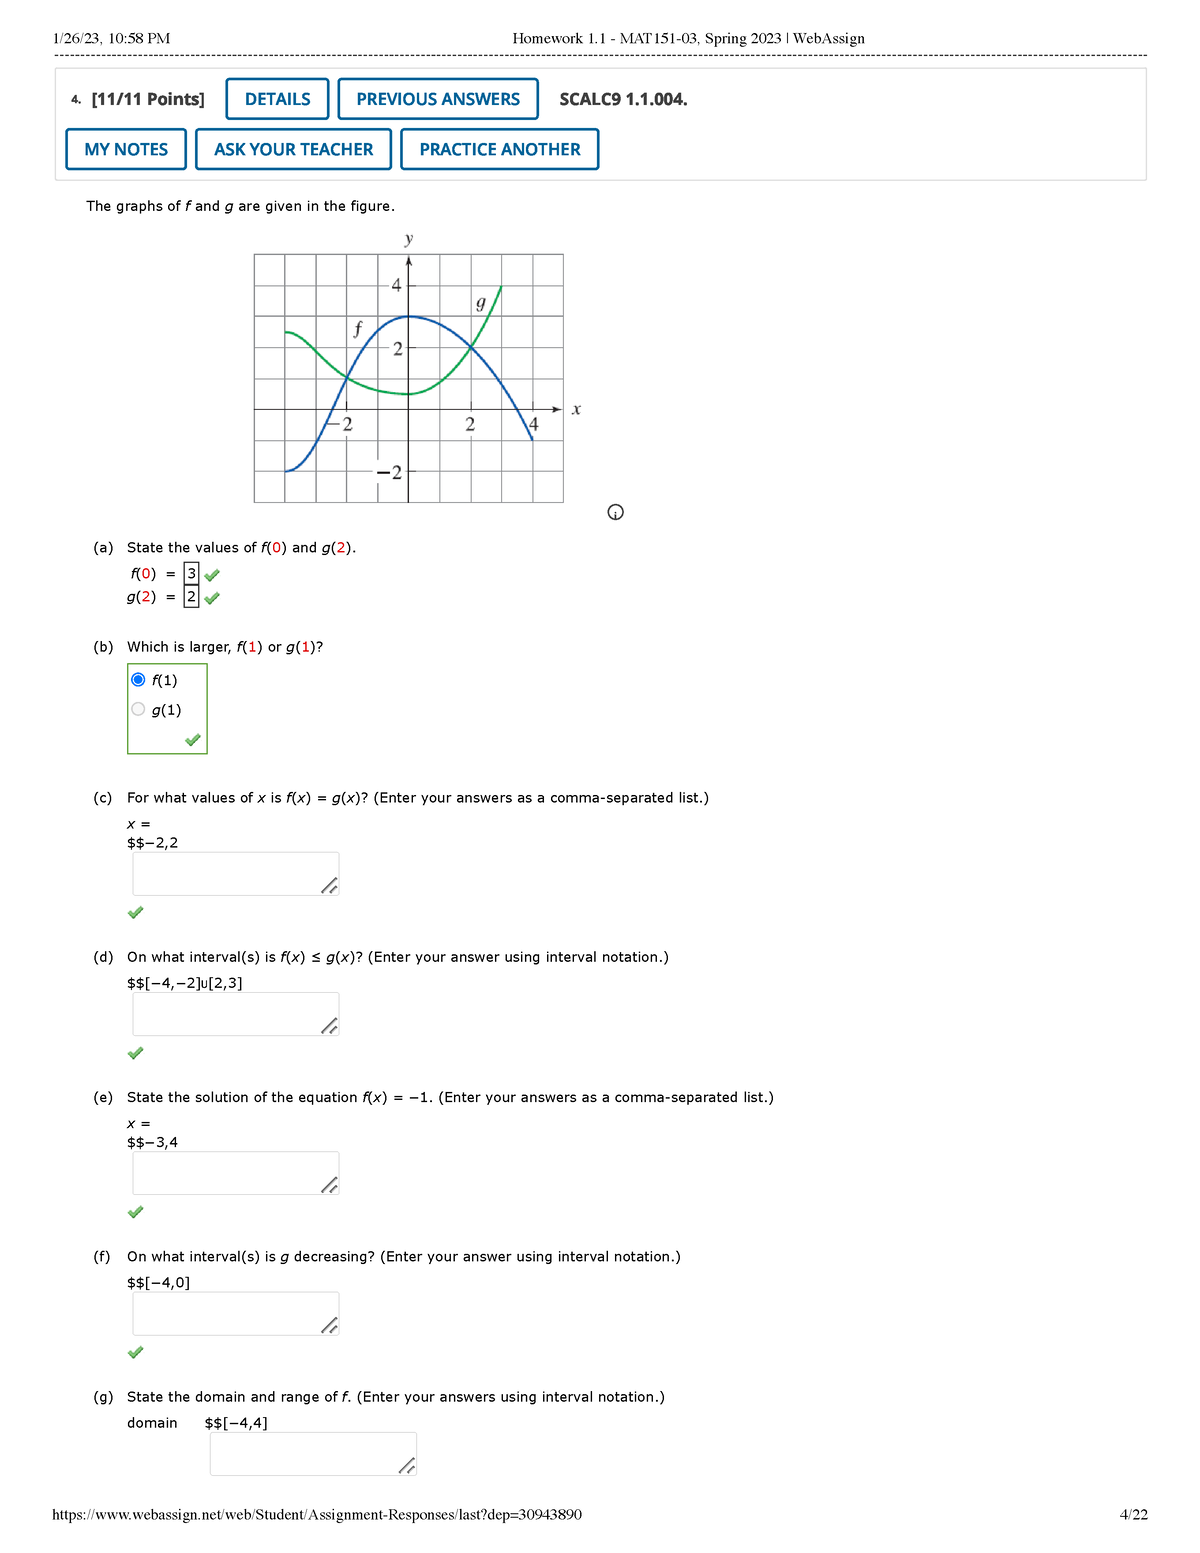 webassign homework answers calculus 1